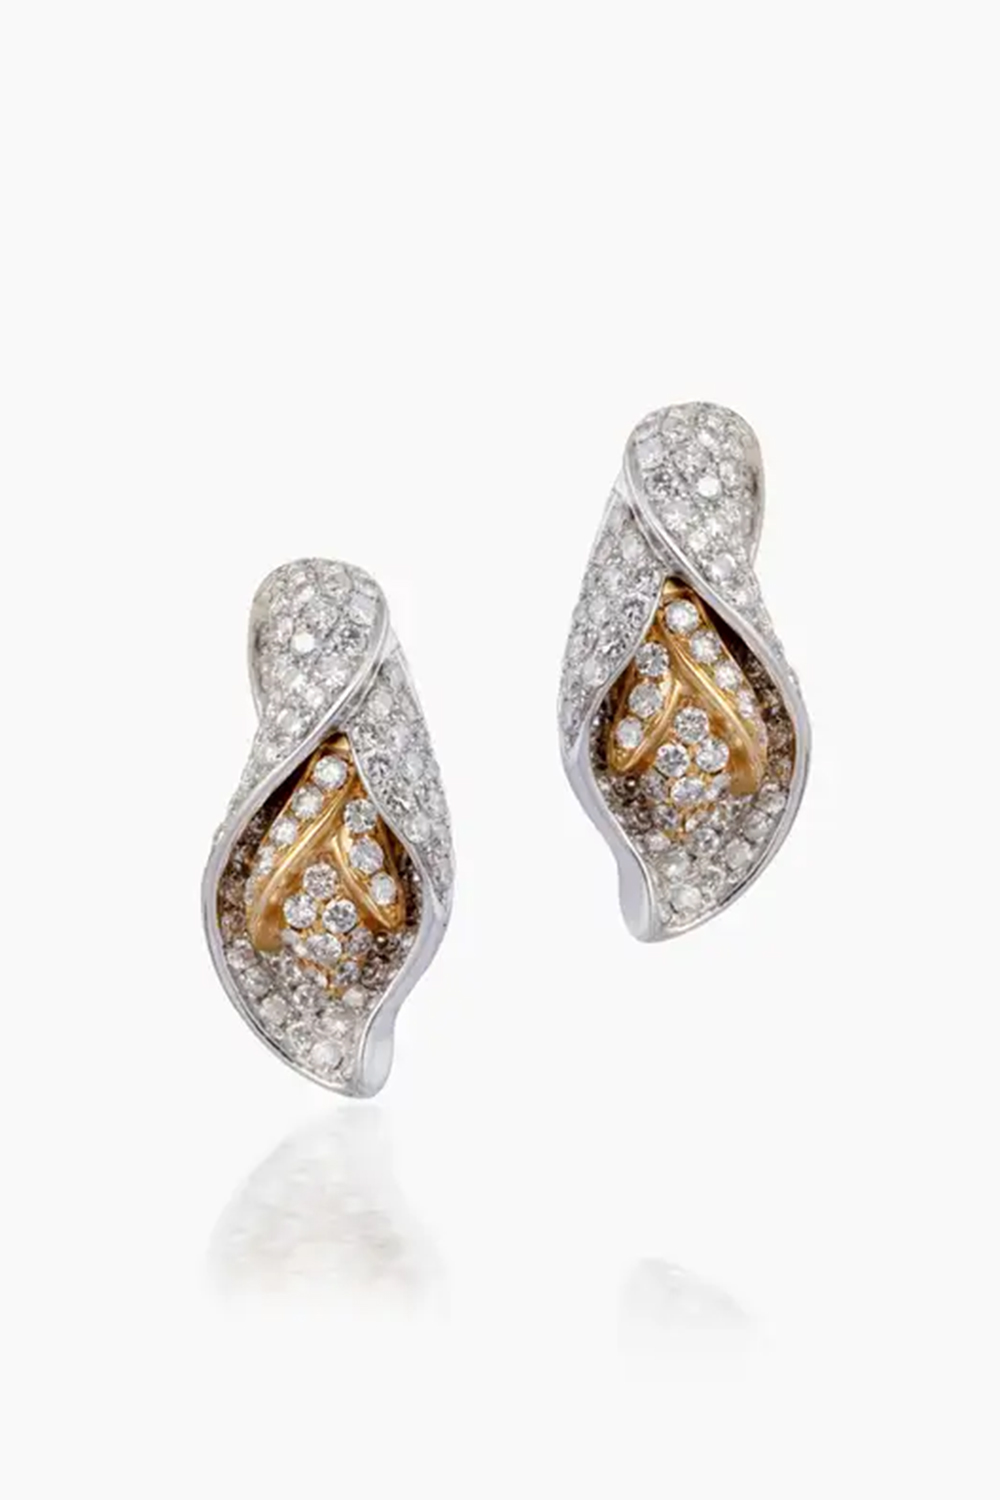 18k gold 1.59cts Diamond Earring